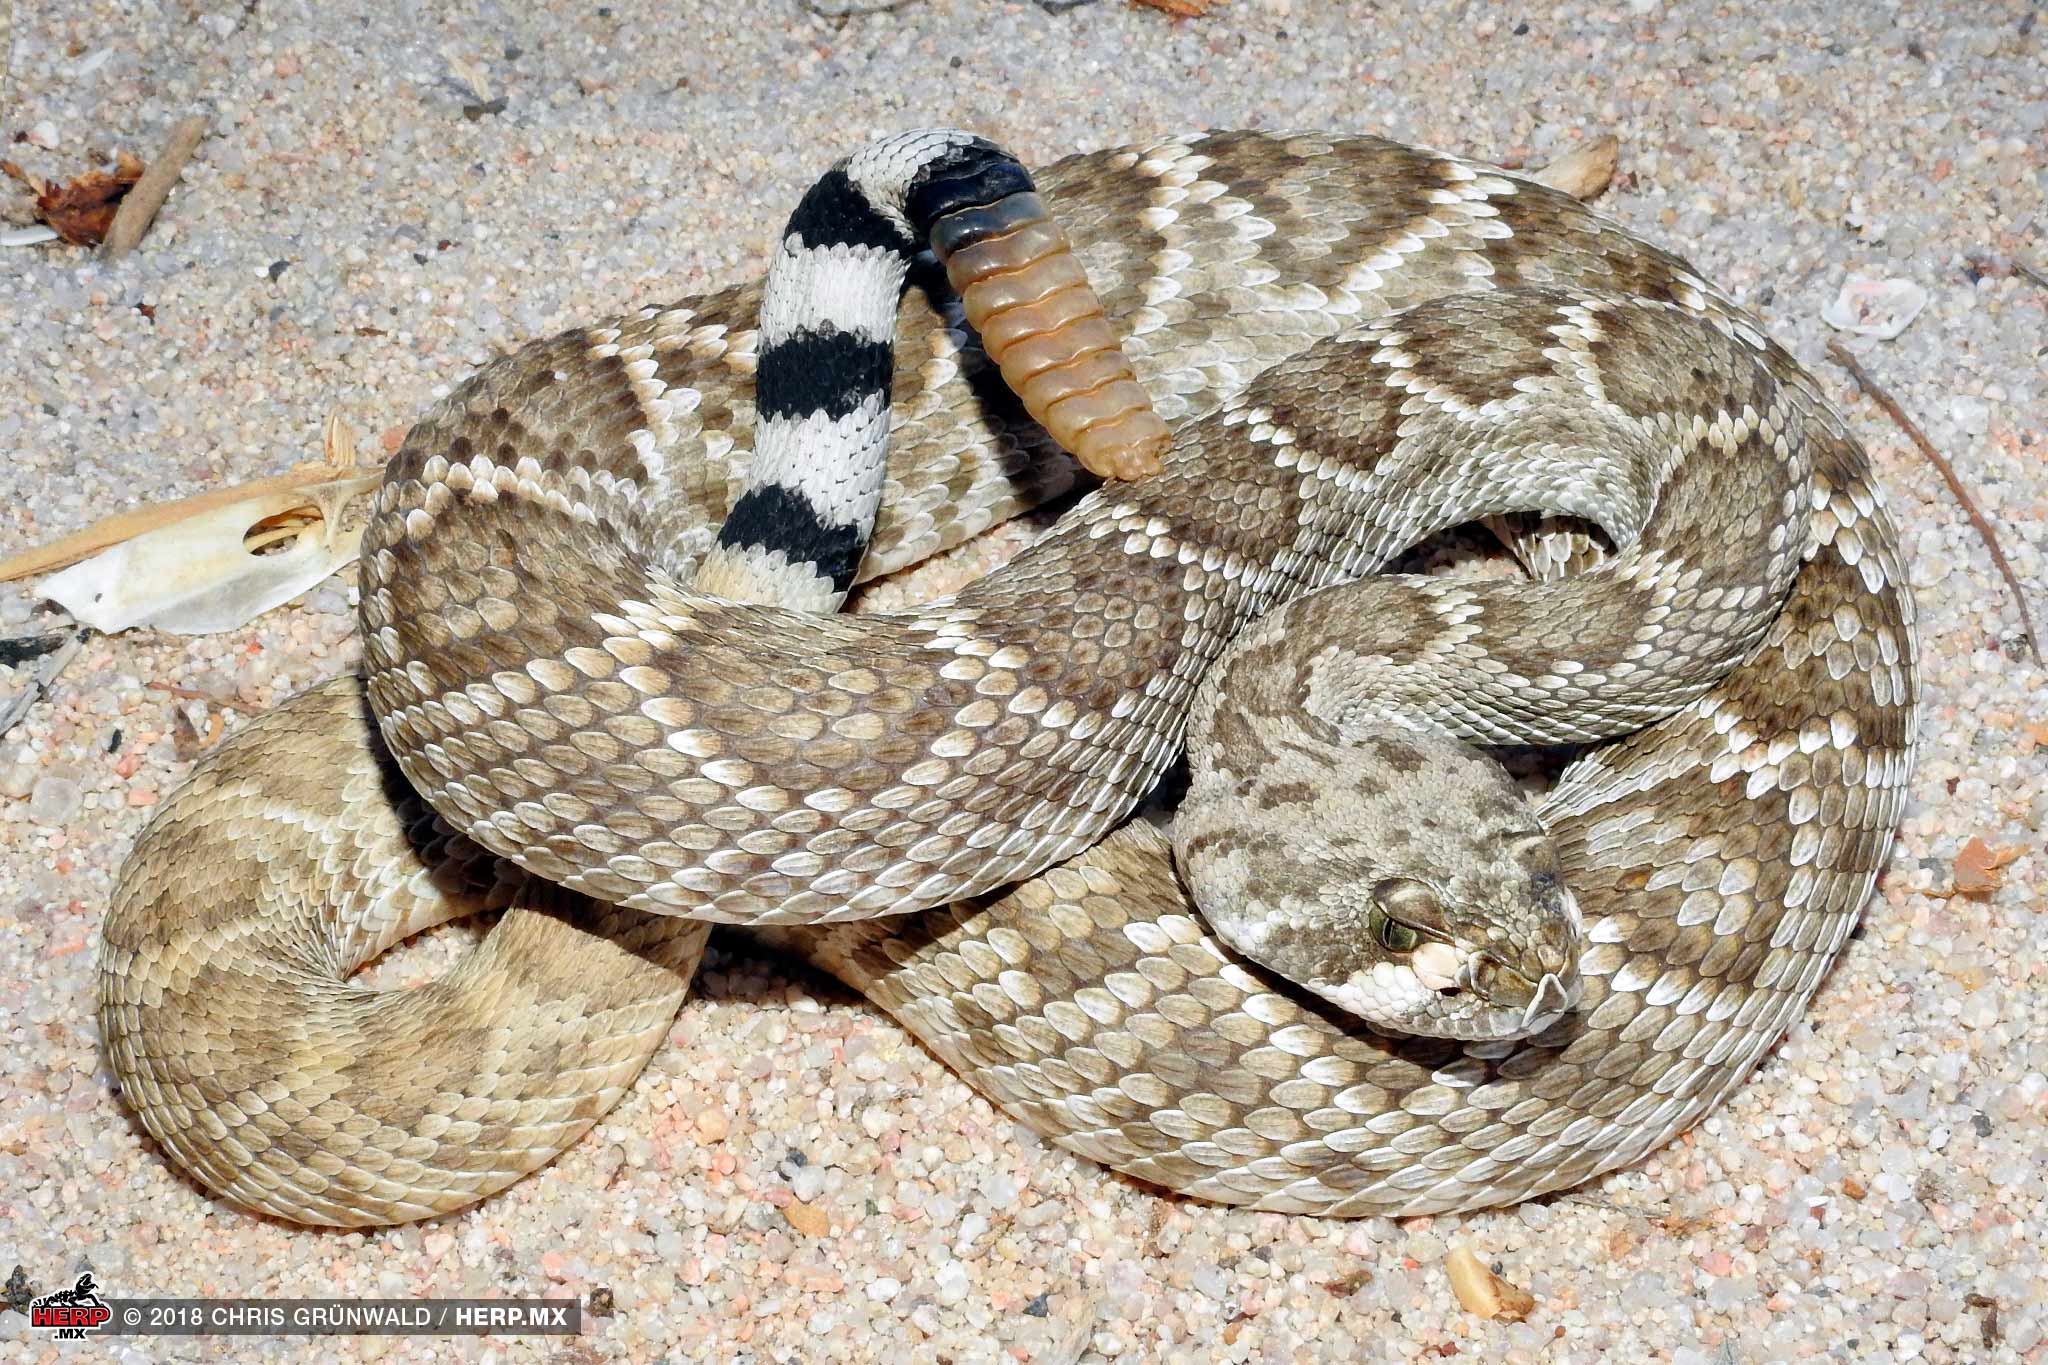 San Lucan Rattlesnake (Crotalus ruber lucasensis) © Chris Grünwald / HERP.MX